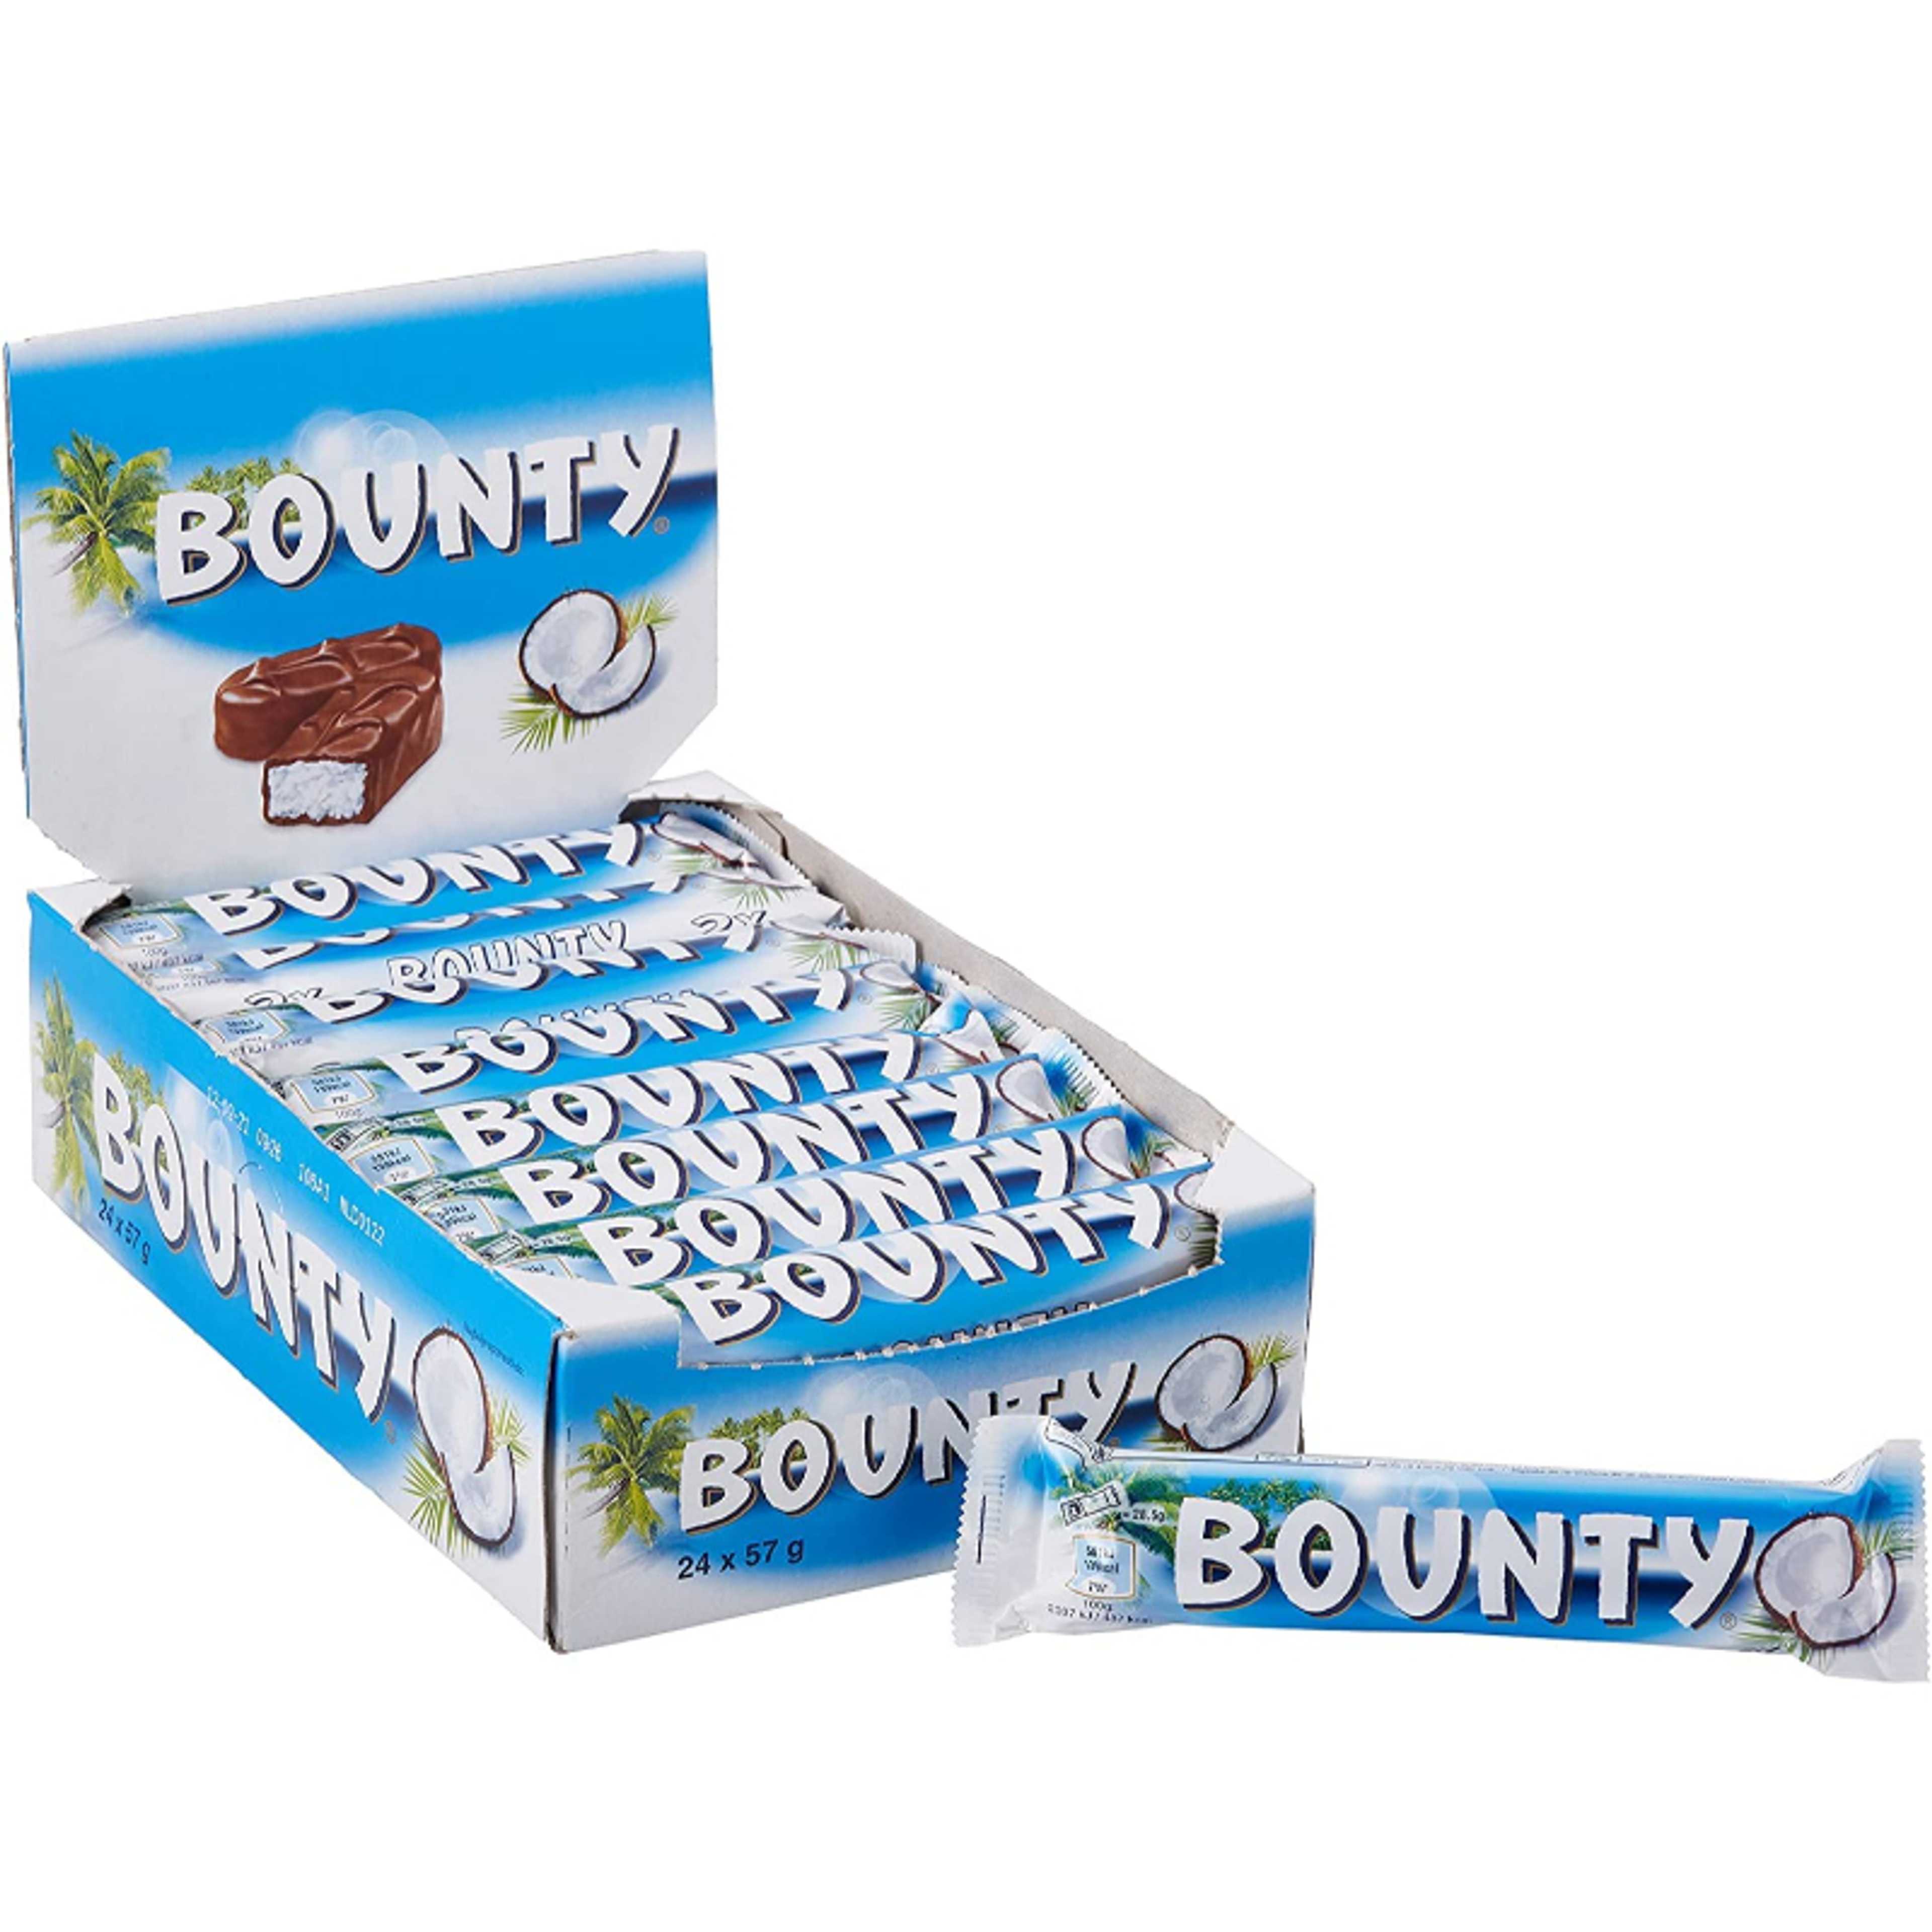 Bounty Chocolate, 57gm, 24 Bars Box